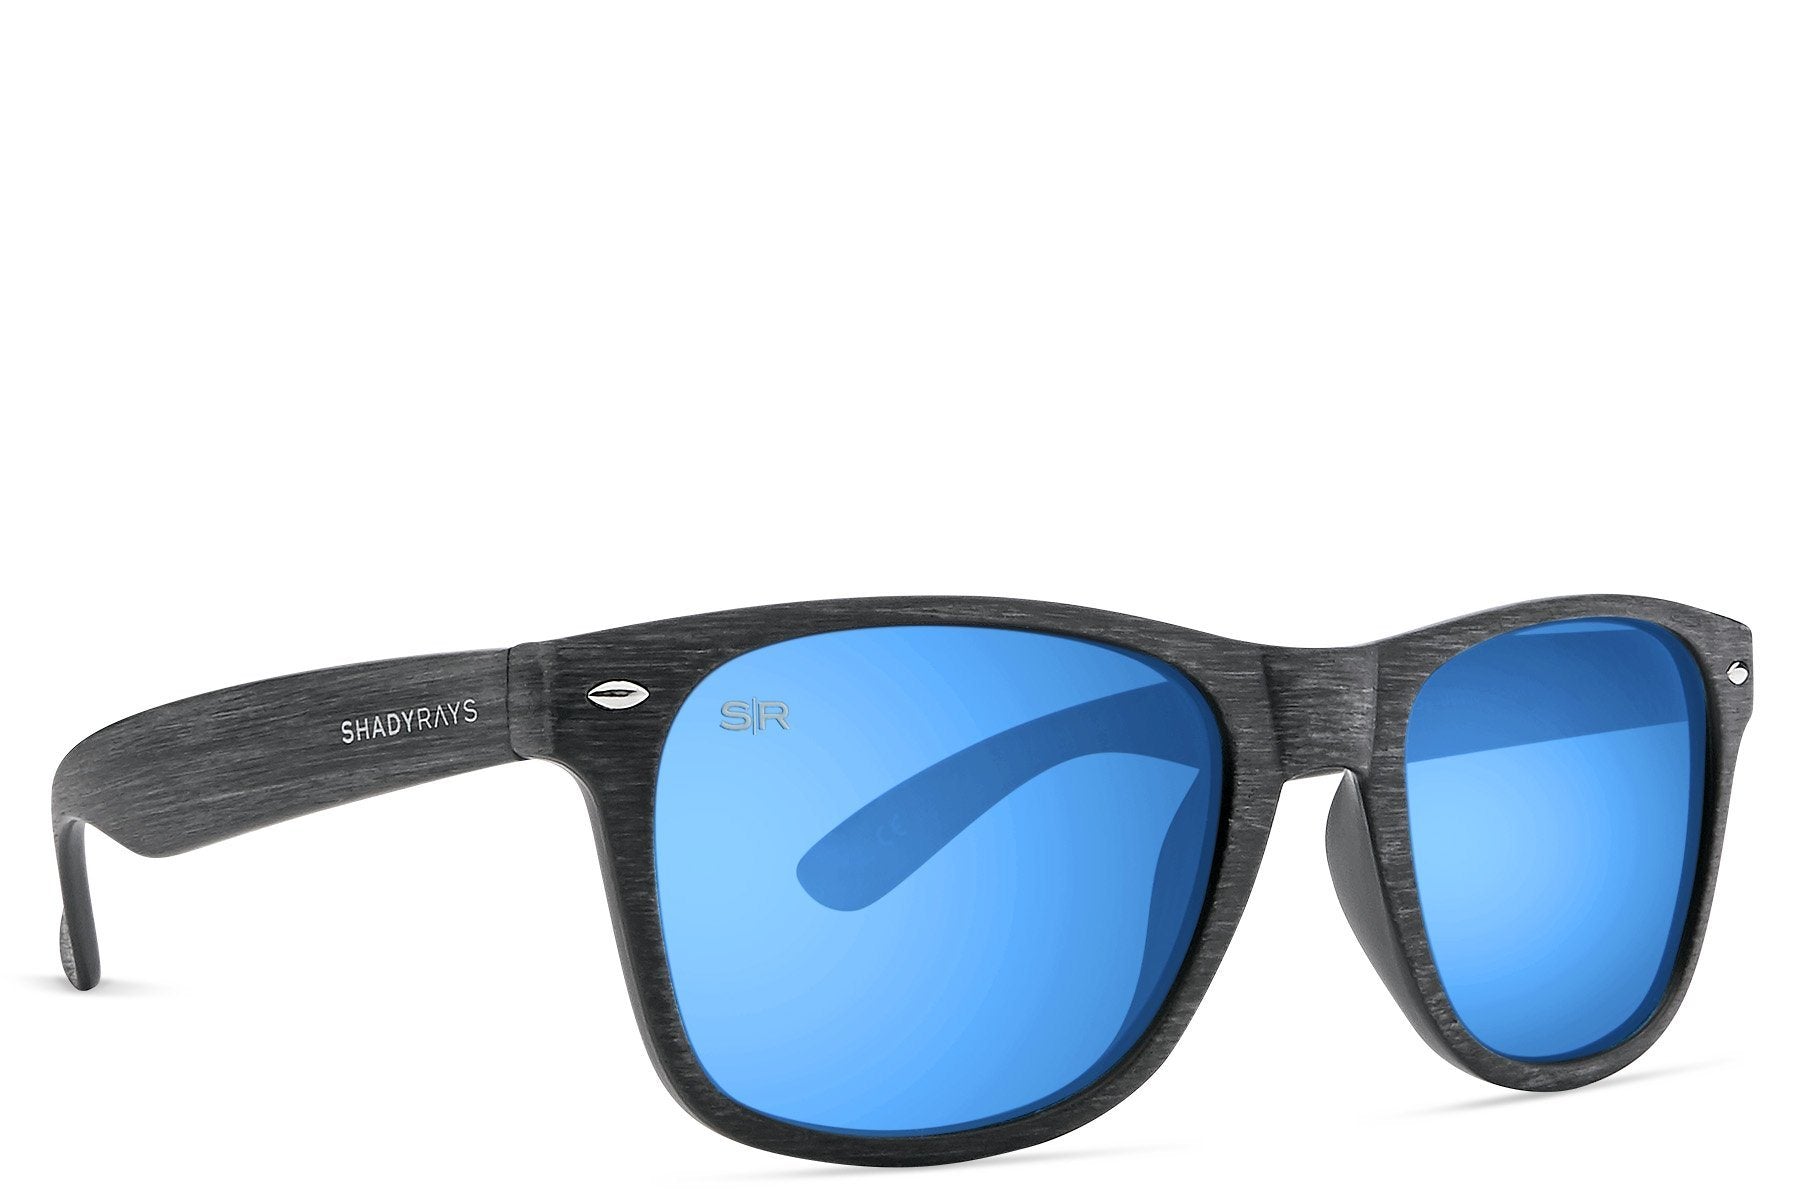 Classic Timber - Black Ocean Polarized Timber Series Shady Rays® | Polarized Sunglasses 